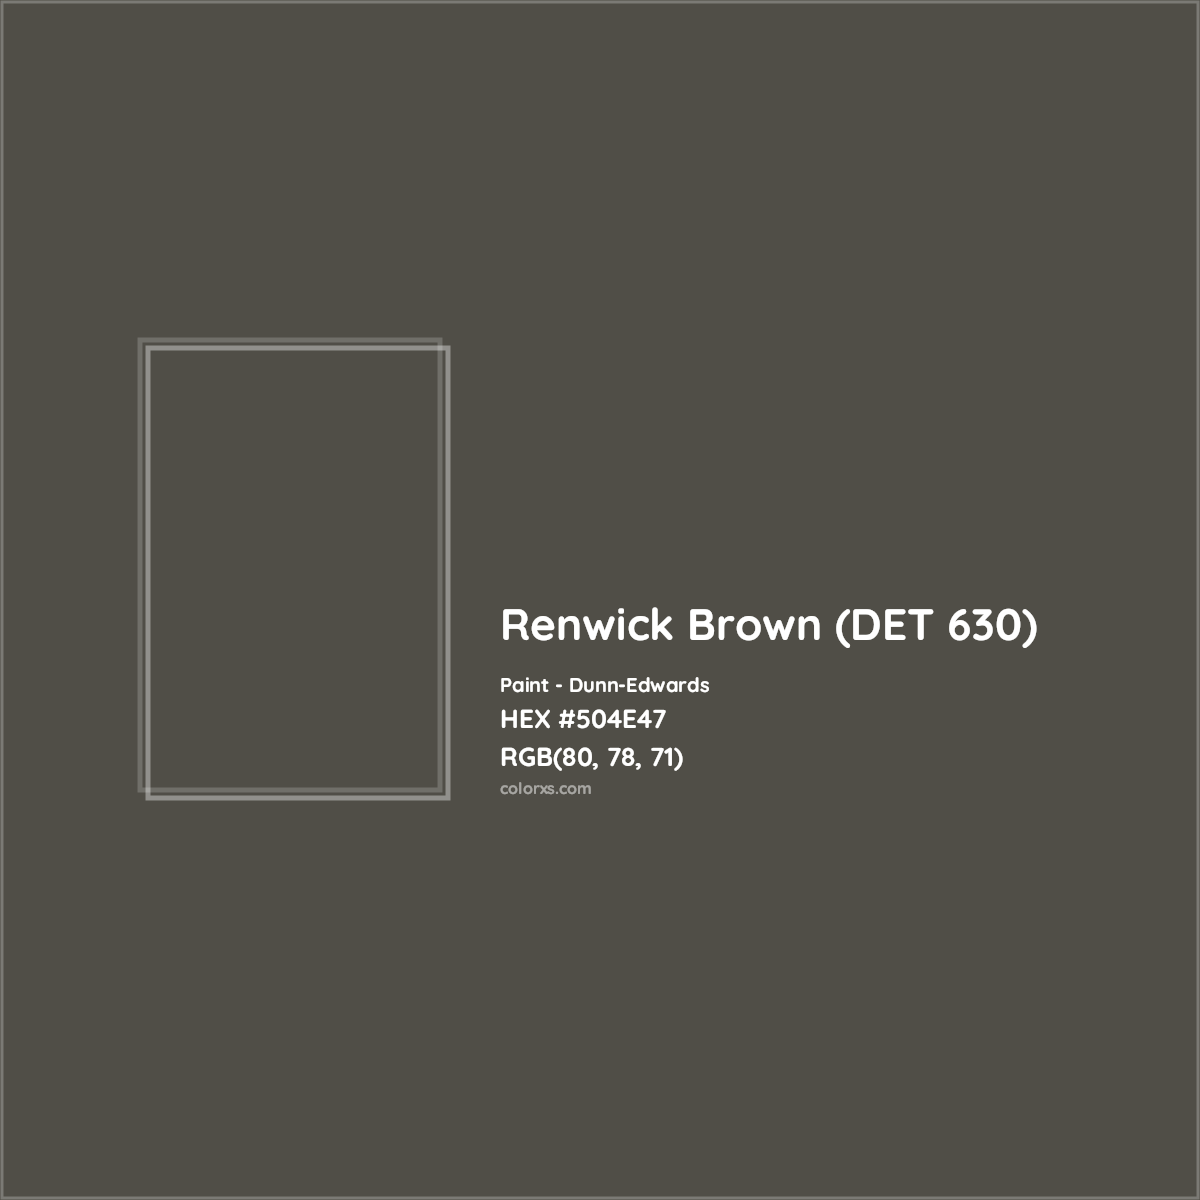 HEX #504E47 Renwick Brown (DET 630) Paint Dunn-Edwards - Color Code